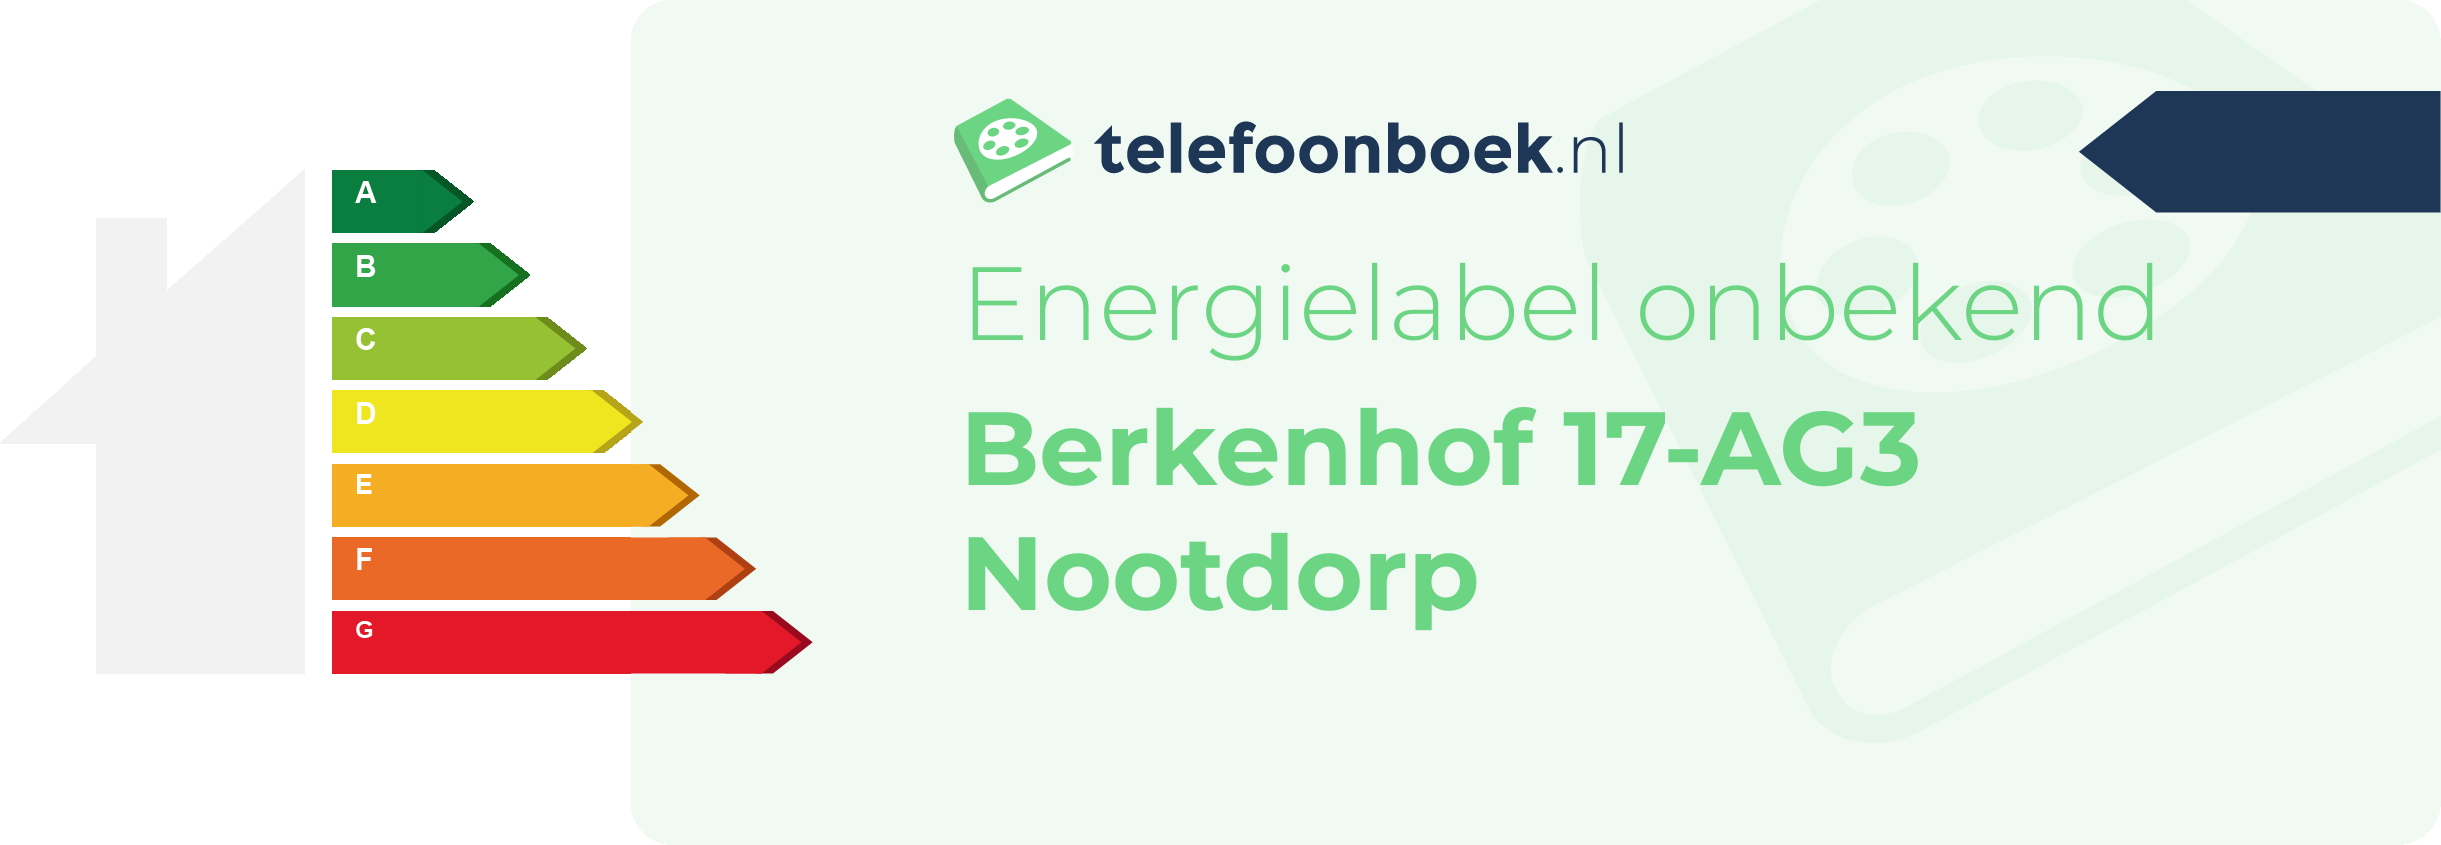 Energielabel Berkenhof 17-AG3 Nootdorp